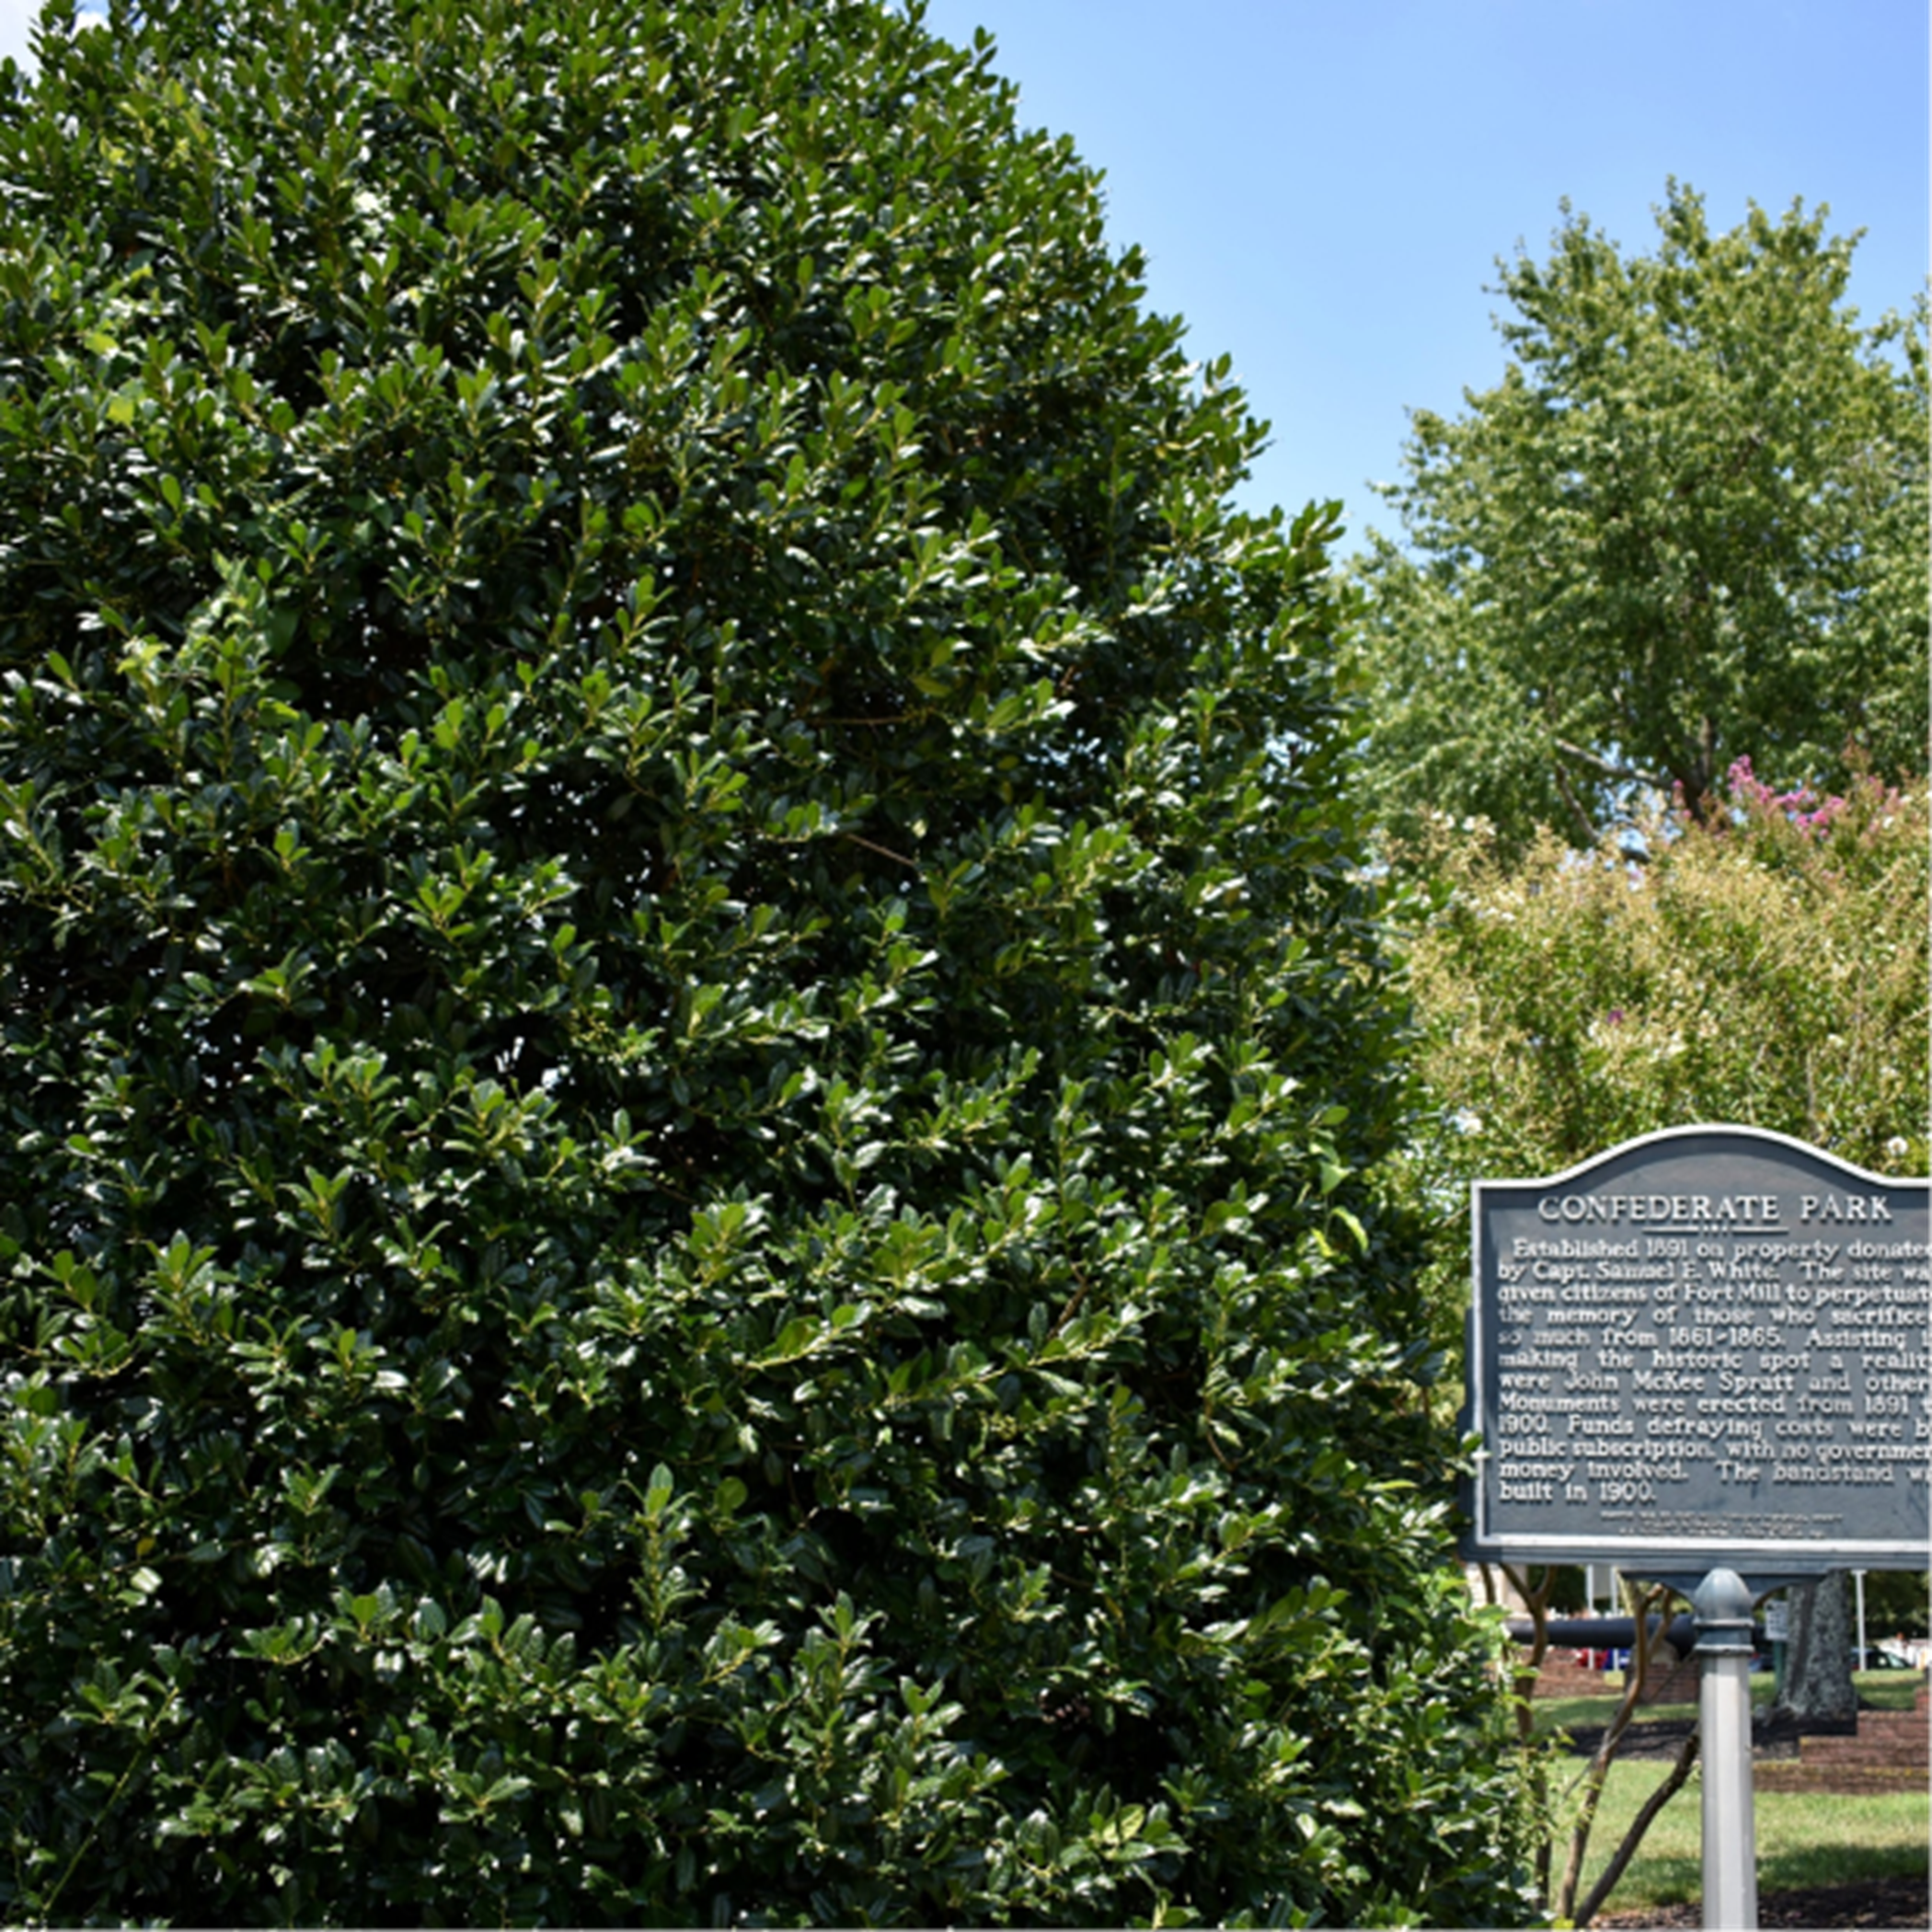 Confederate park sign